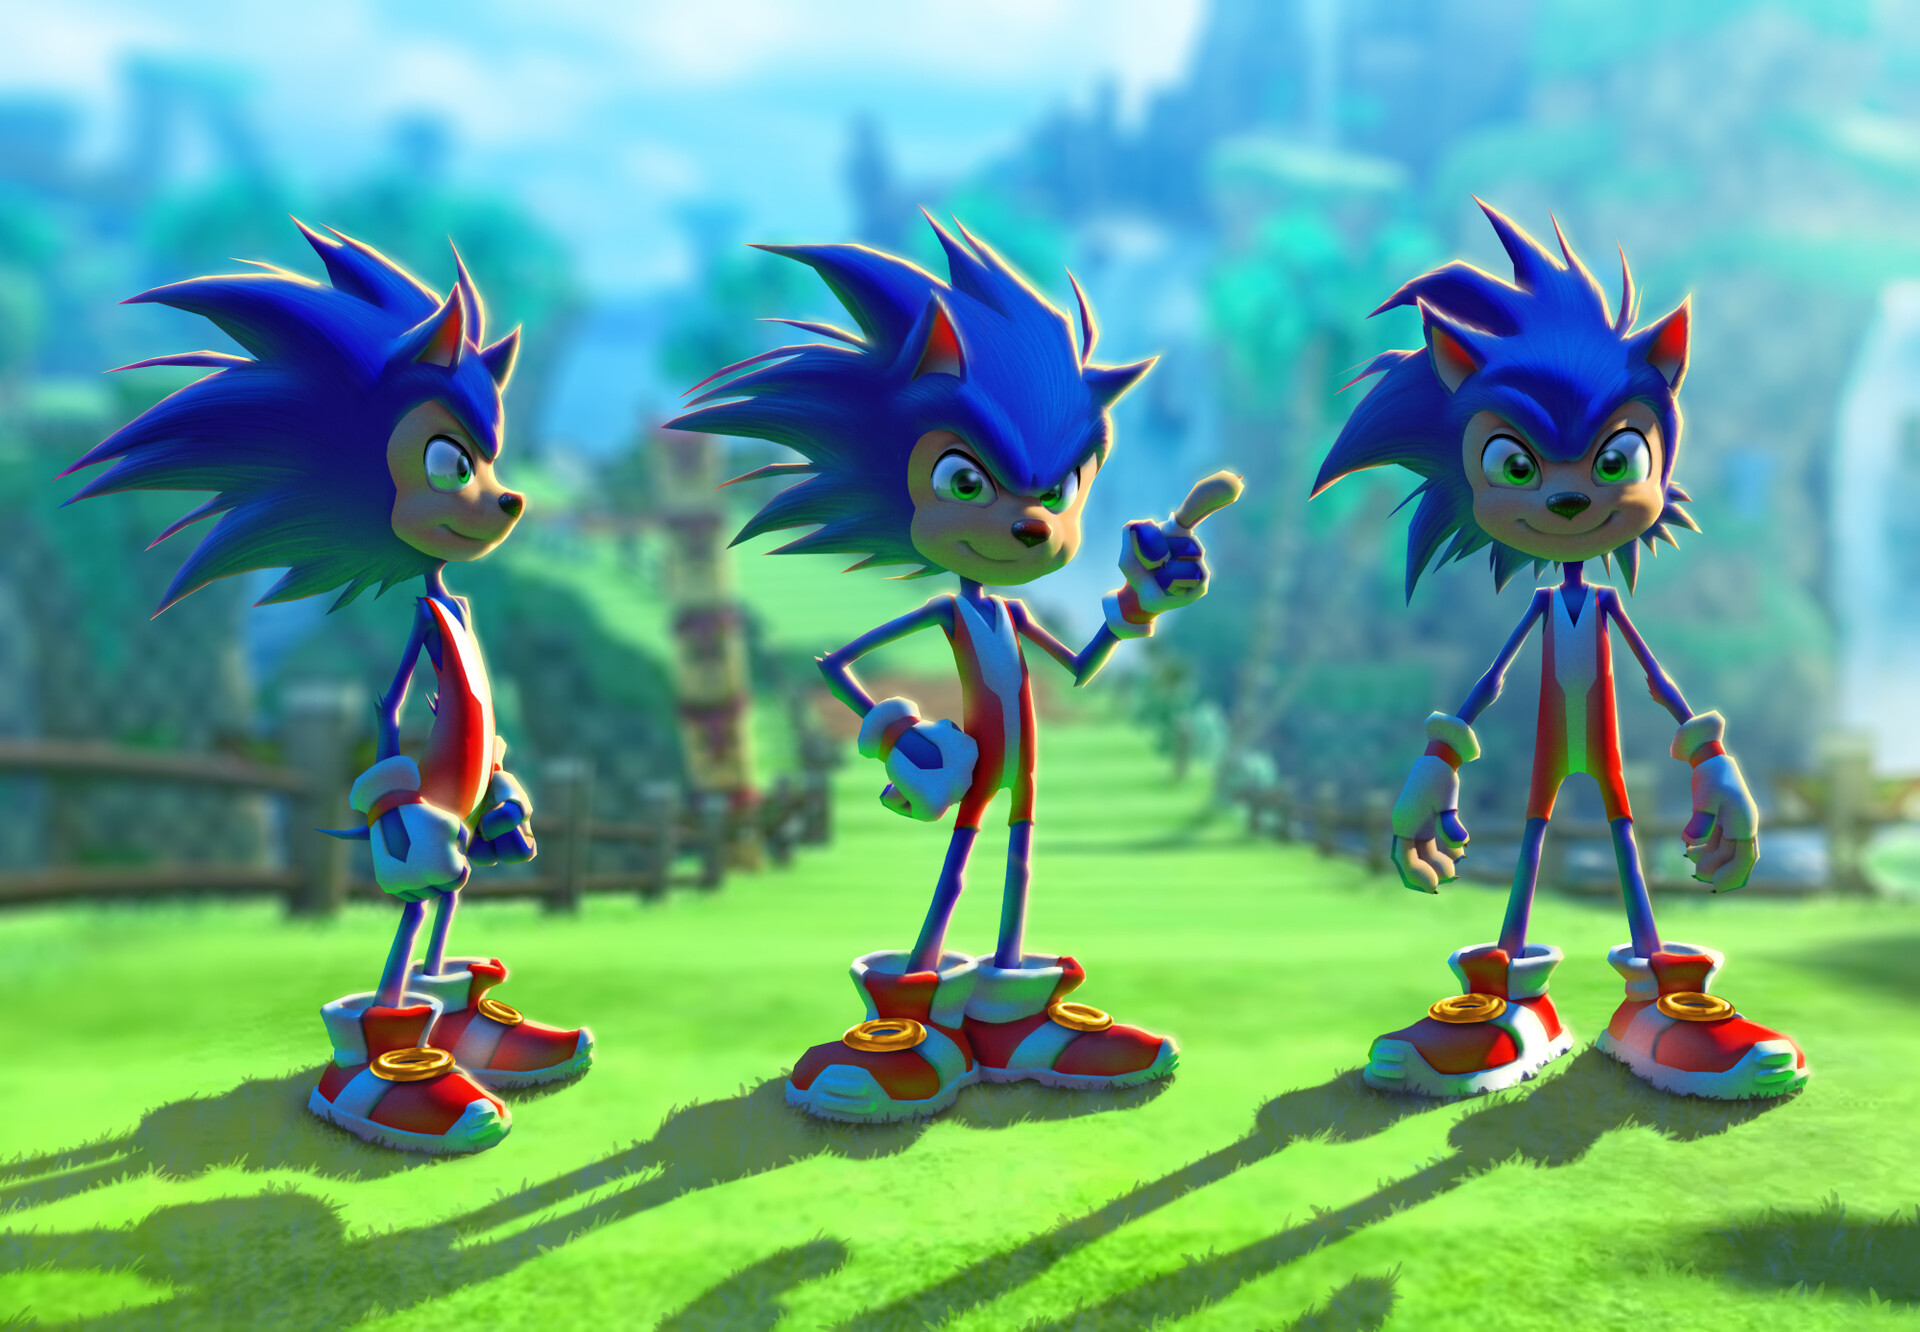 ArtStation - Sonic The Hedgehog Movie - My Concept Art of Sonic